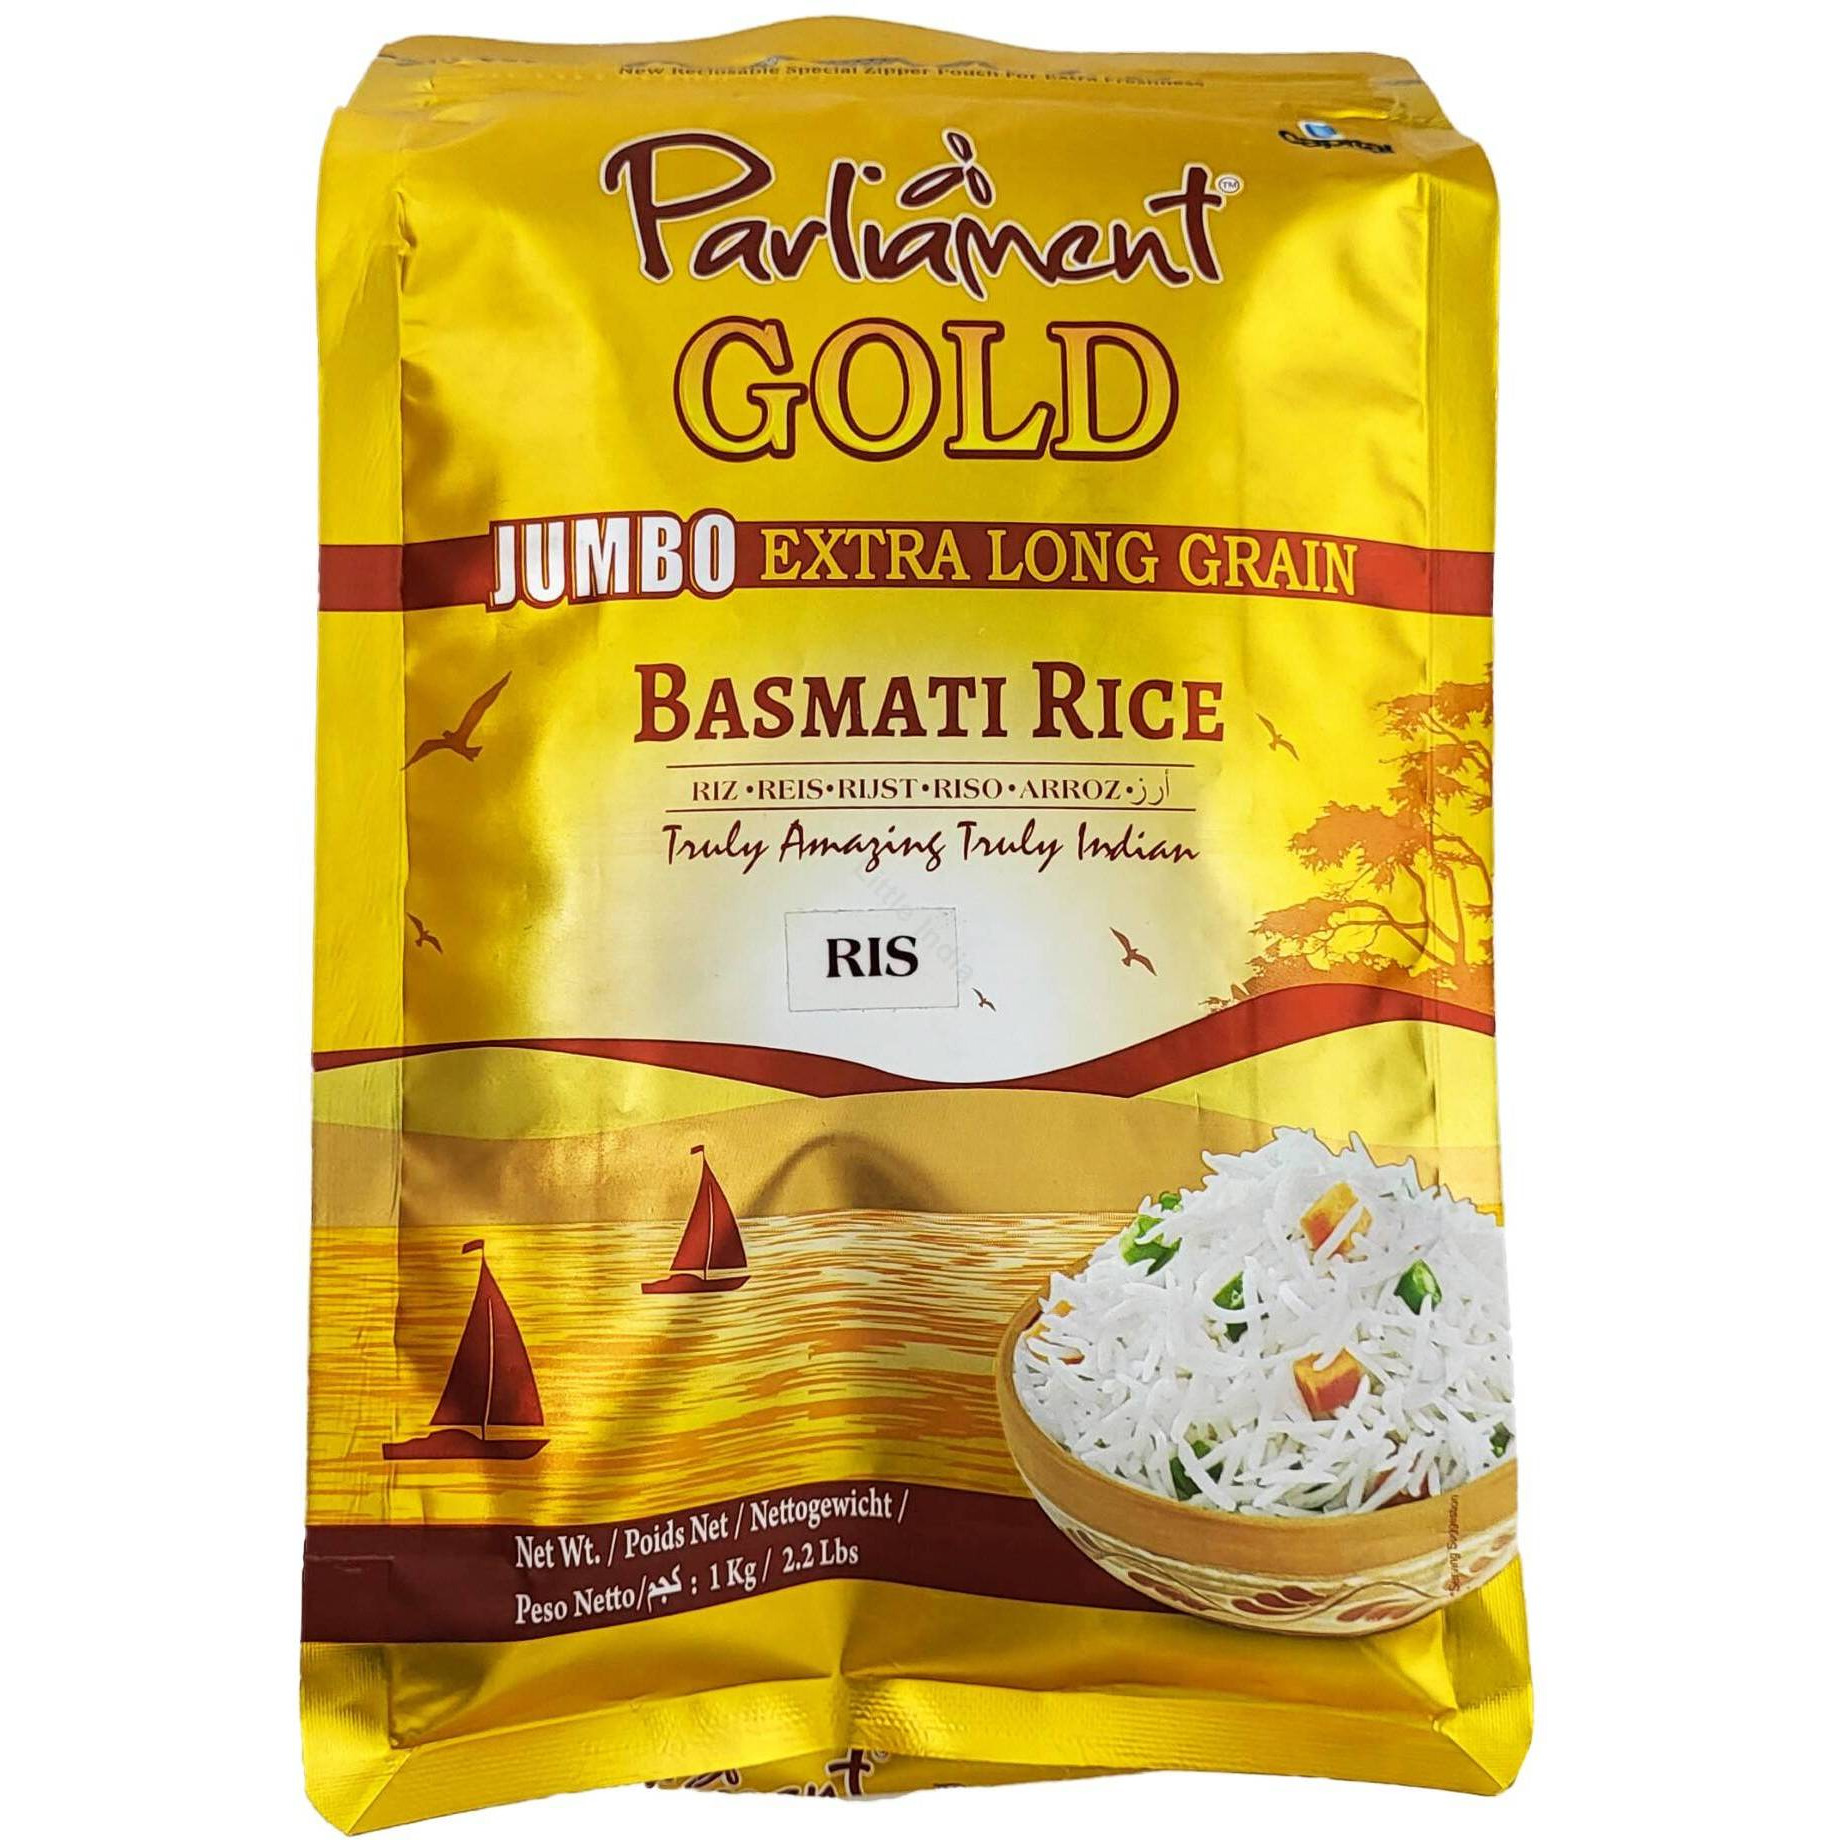 Parliament Gold Jumbo Extra Long Grain Basmati Rice - 10 Lb (4.5 Kg)